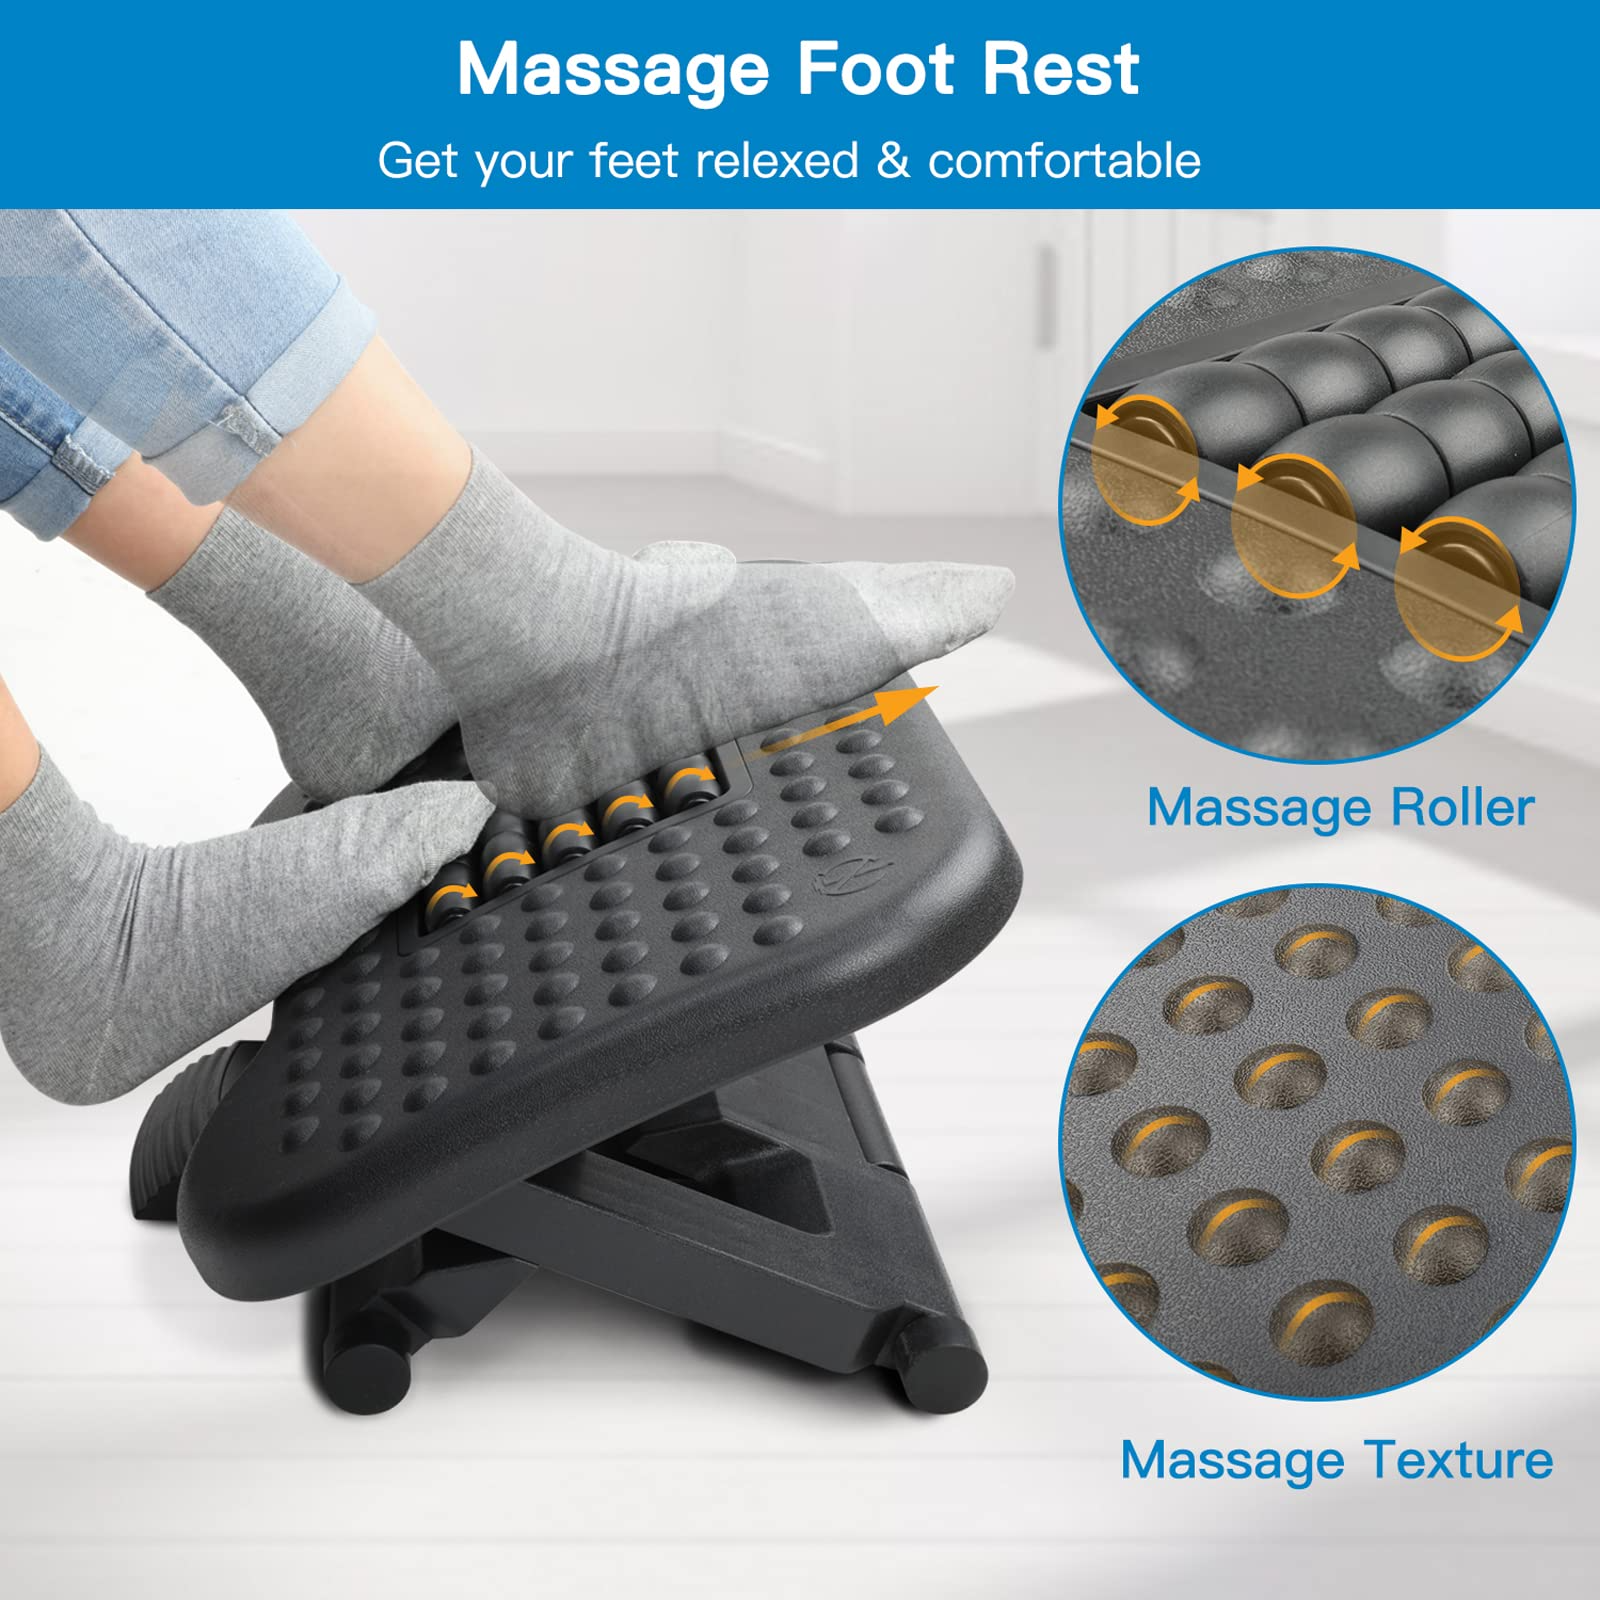 Rolling Leg Rest Foot Stool Footrest Under Desk Foot Stool Height